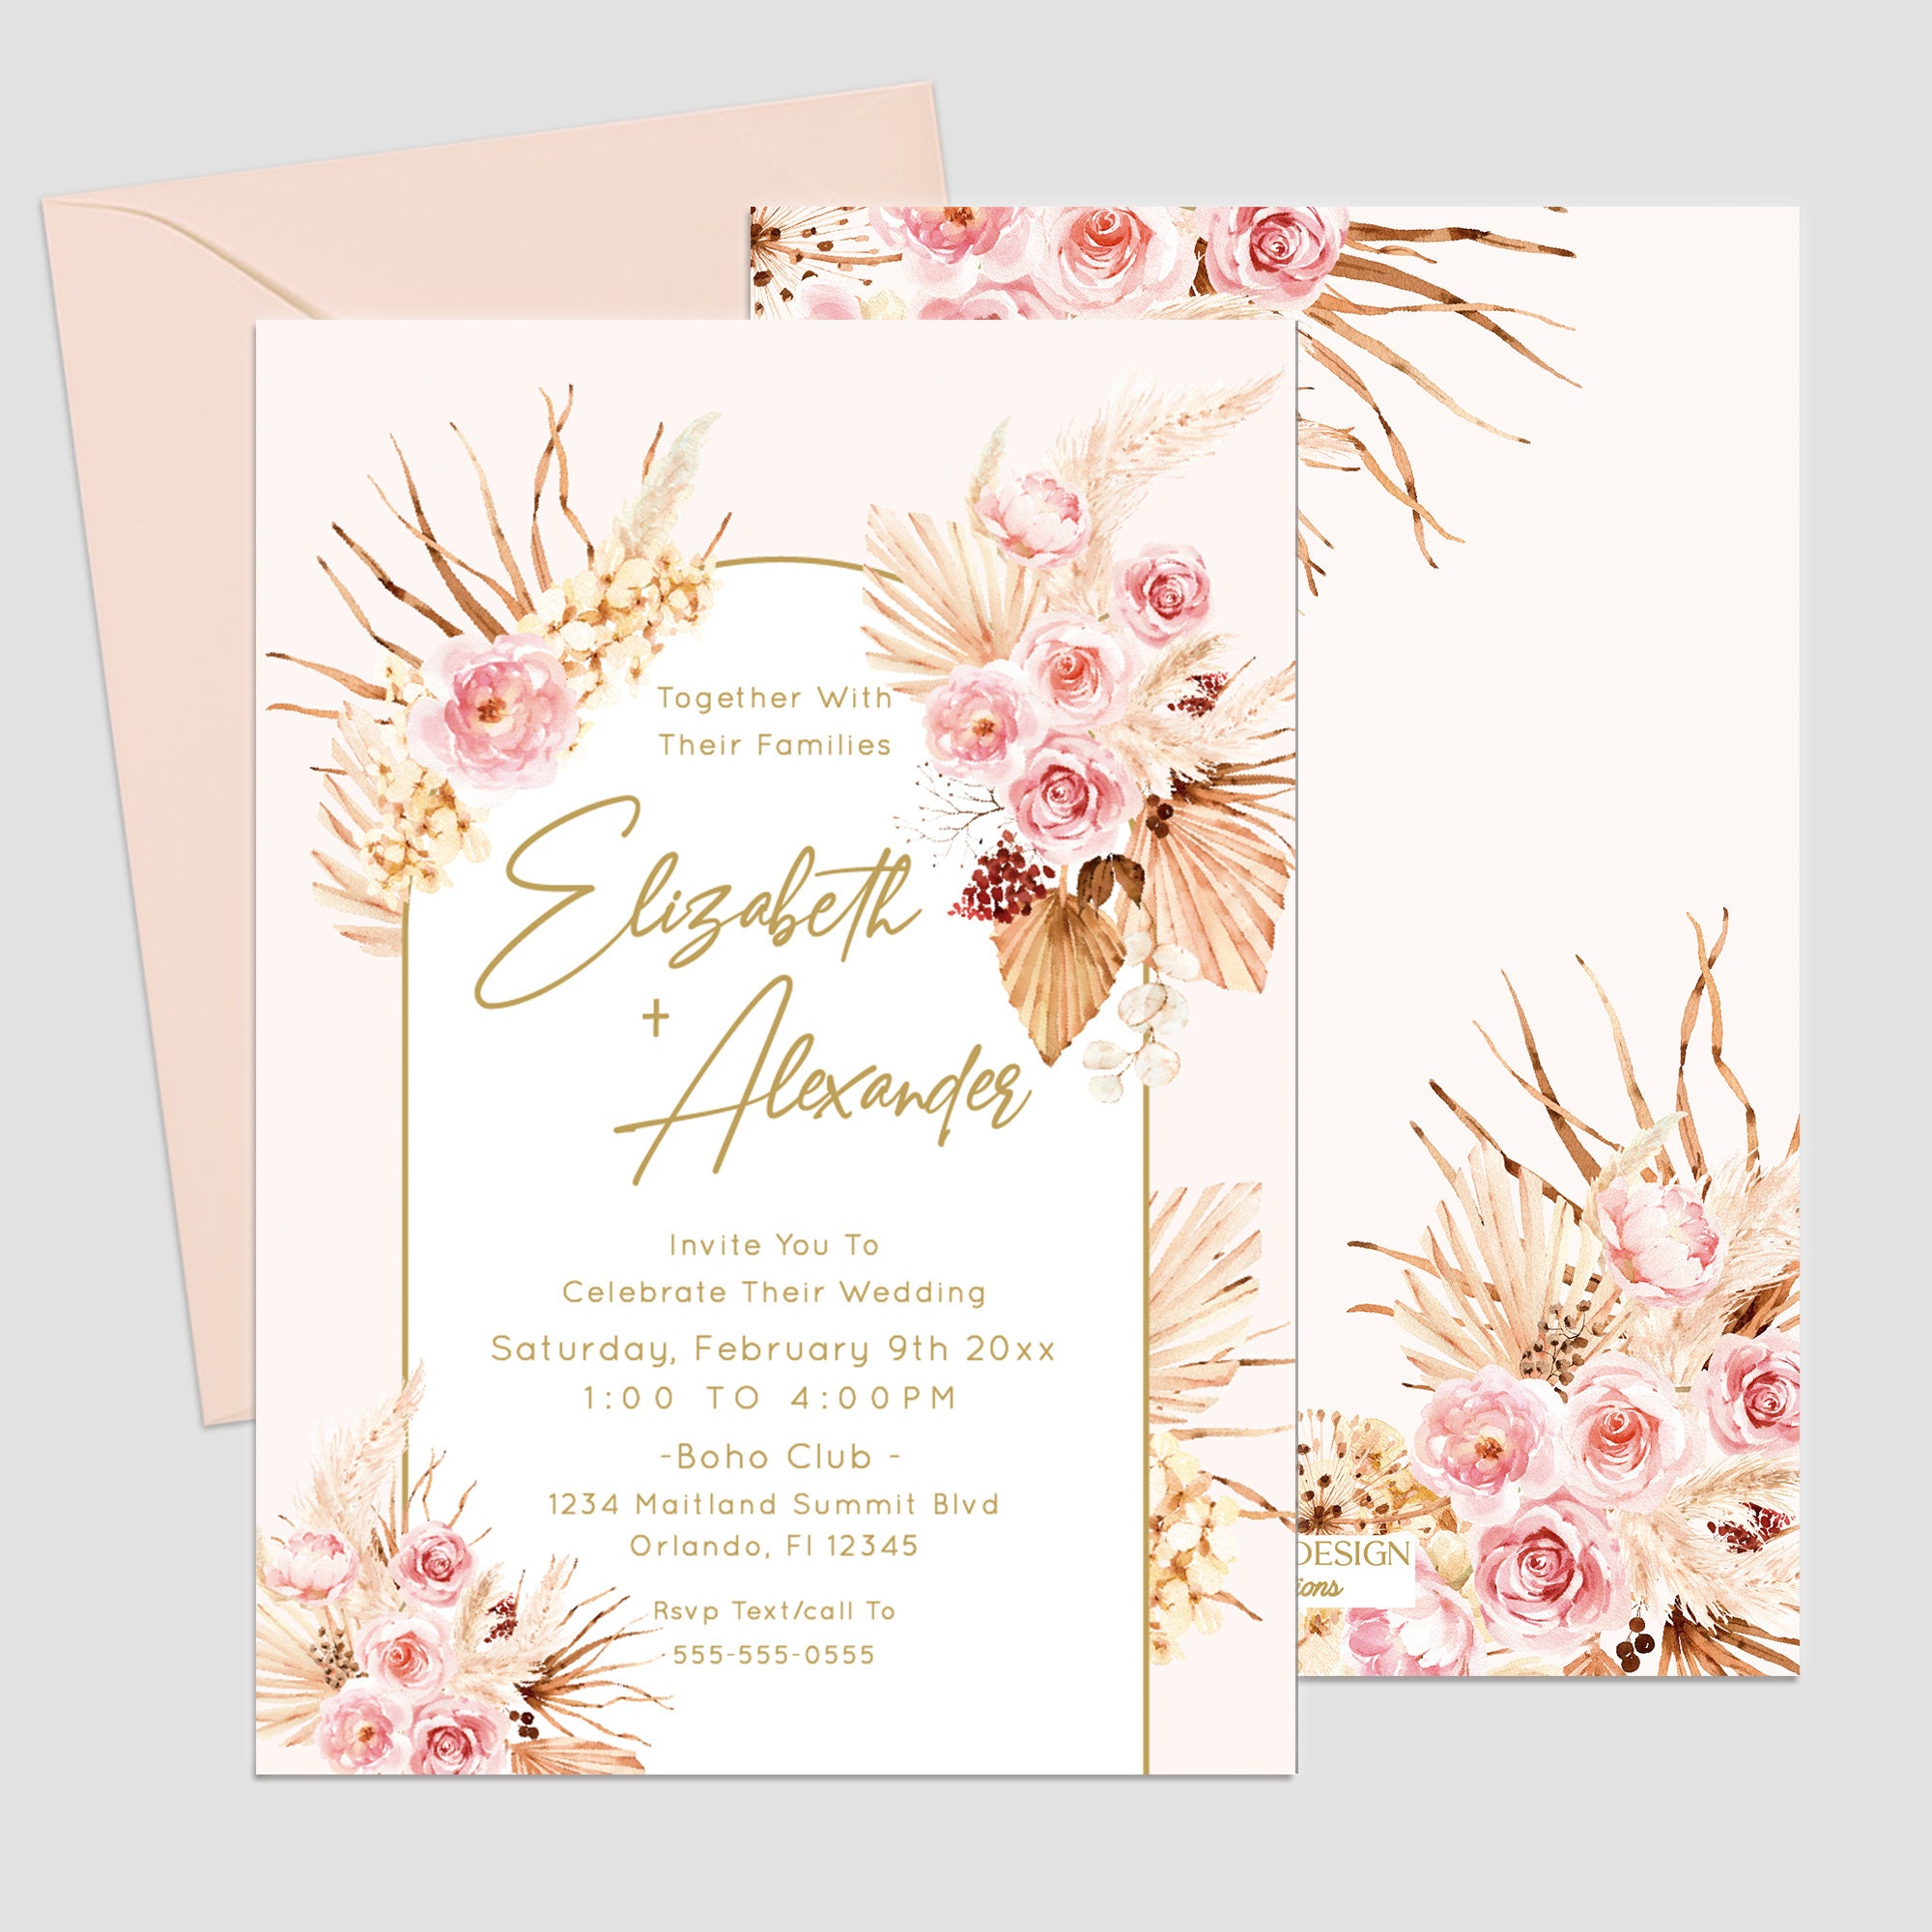 boho-chic-wedding-boho-chic-invite-printable-invitation